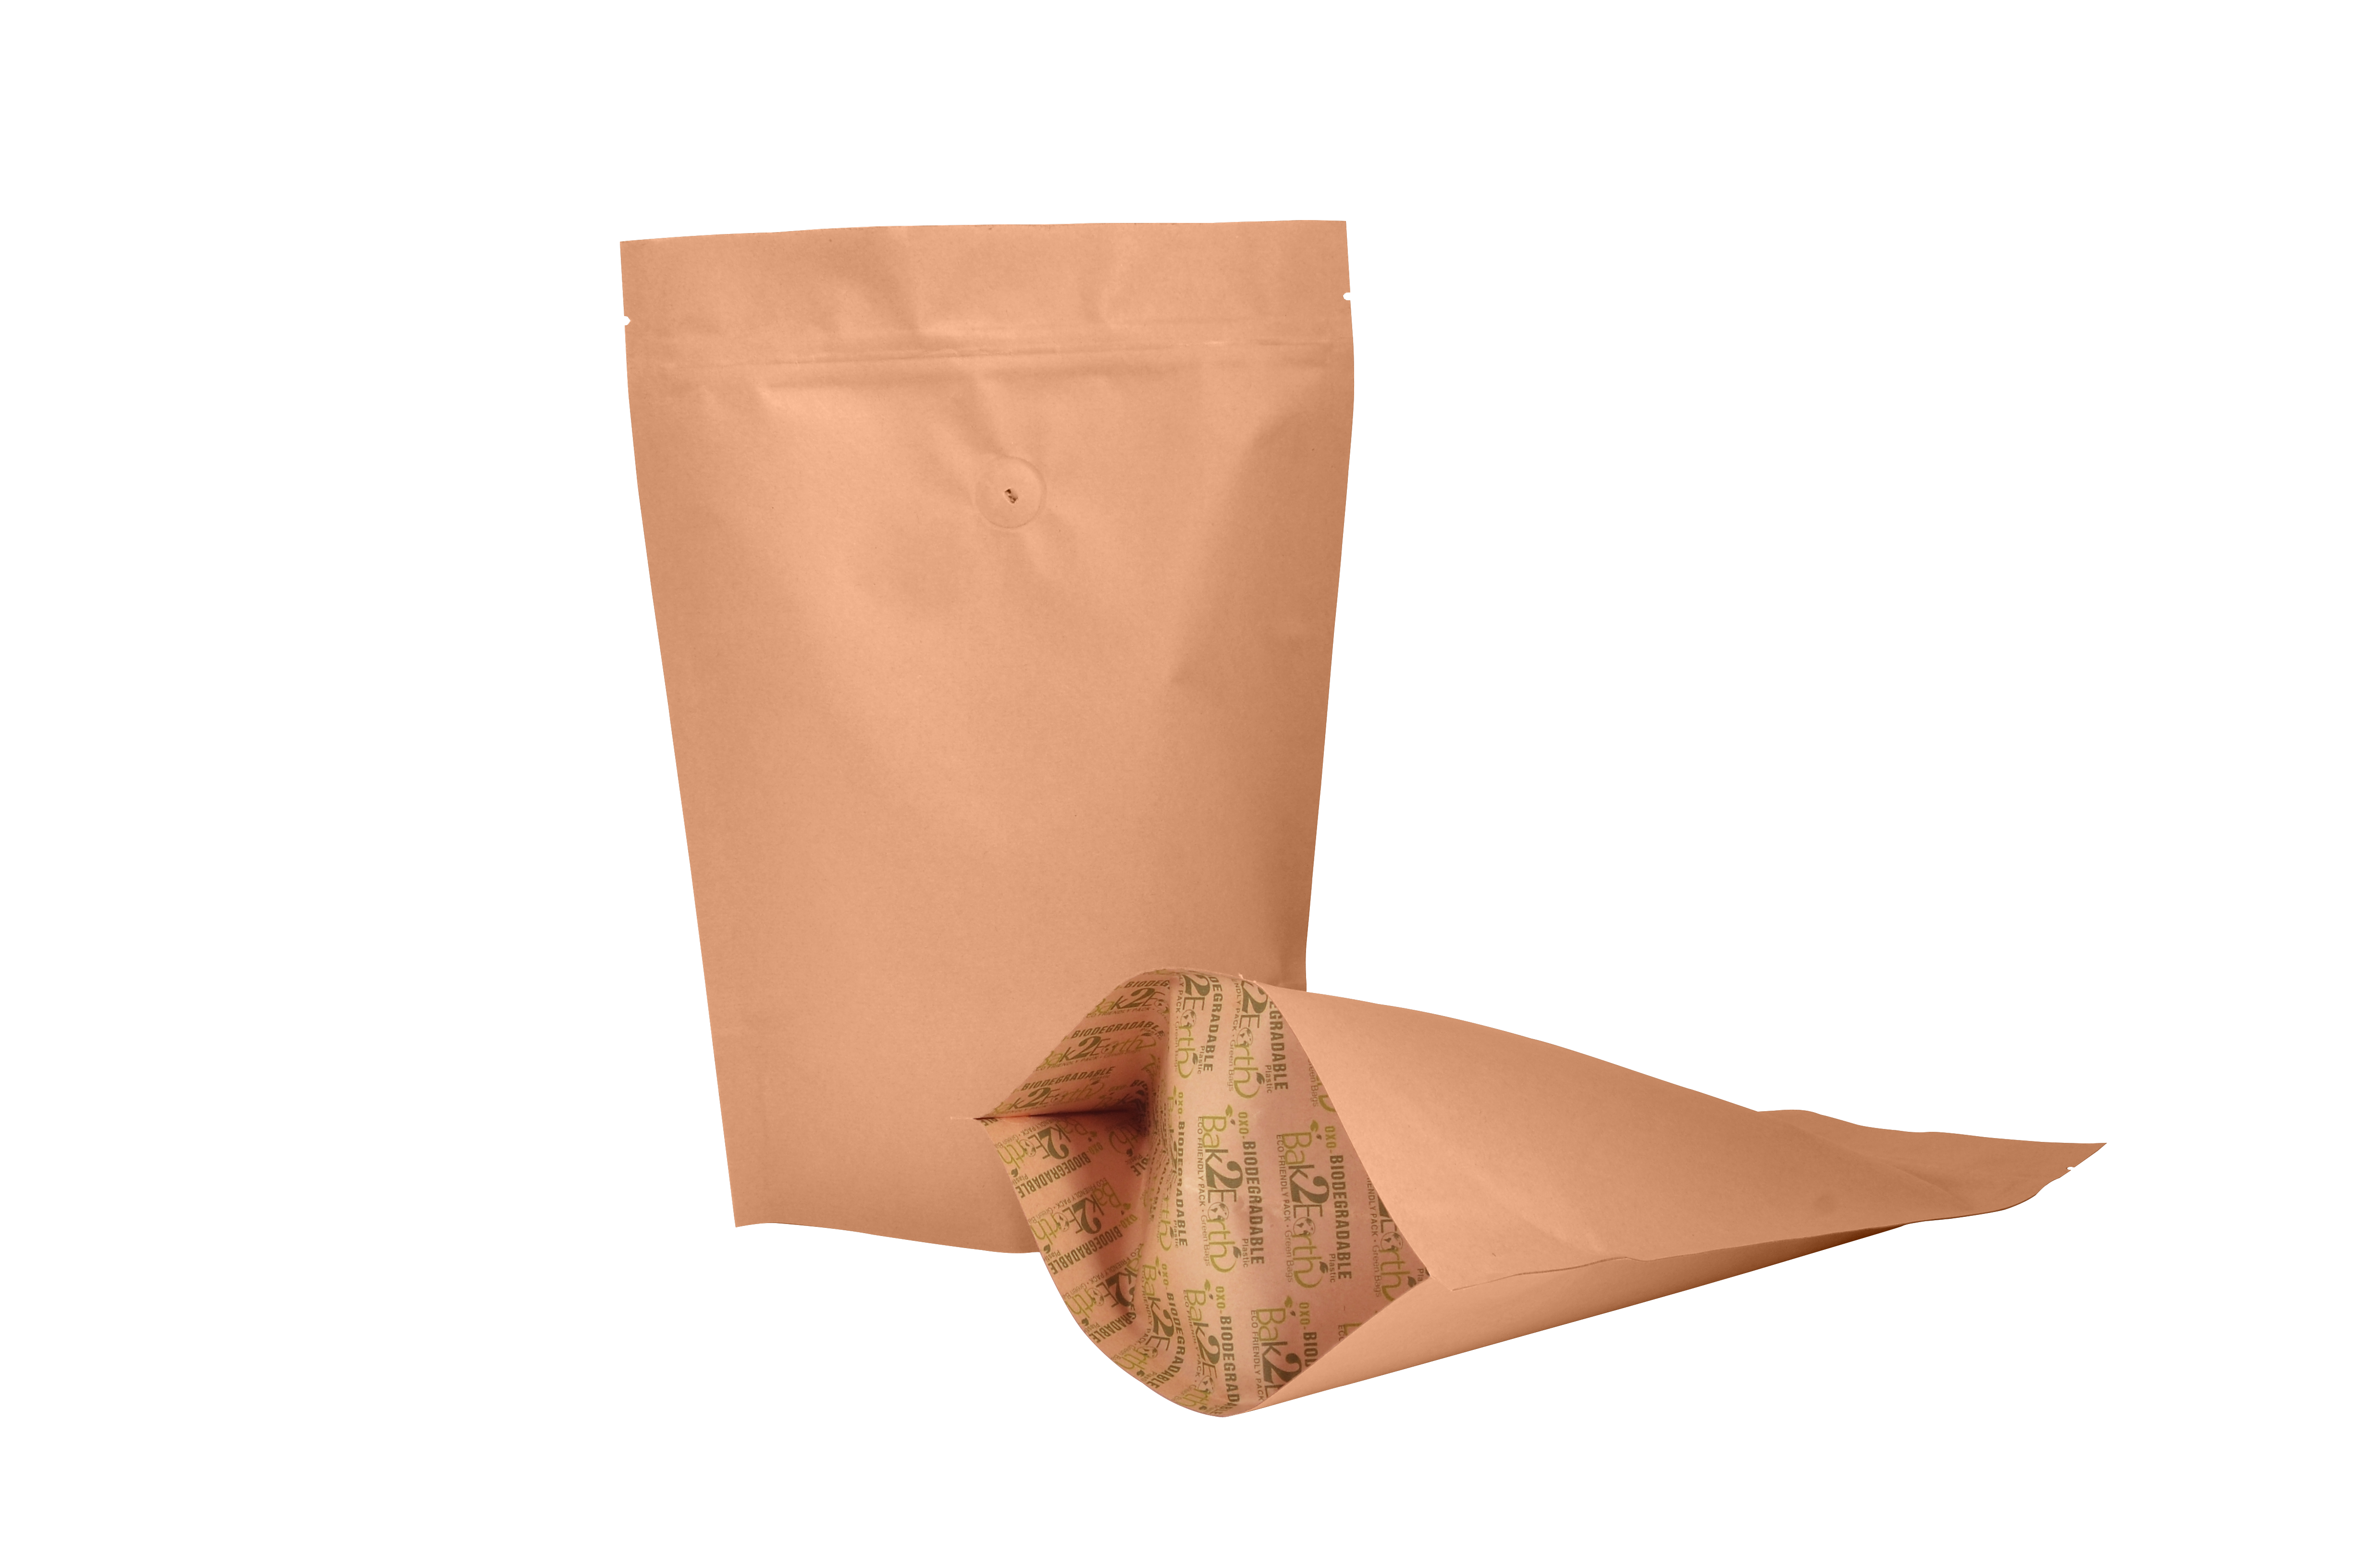 Oxo-degradable bags